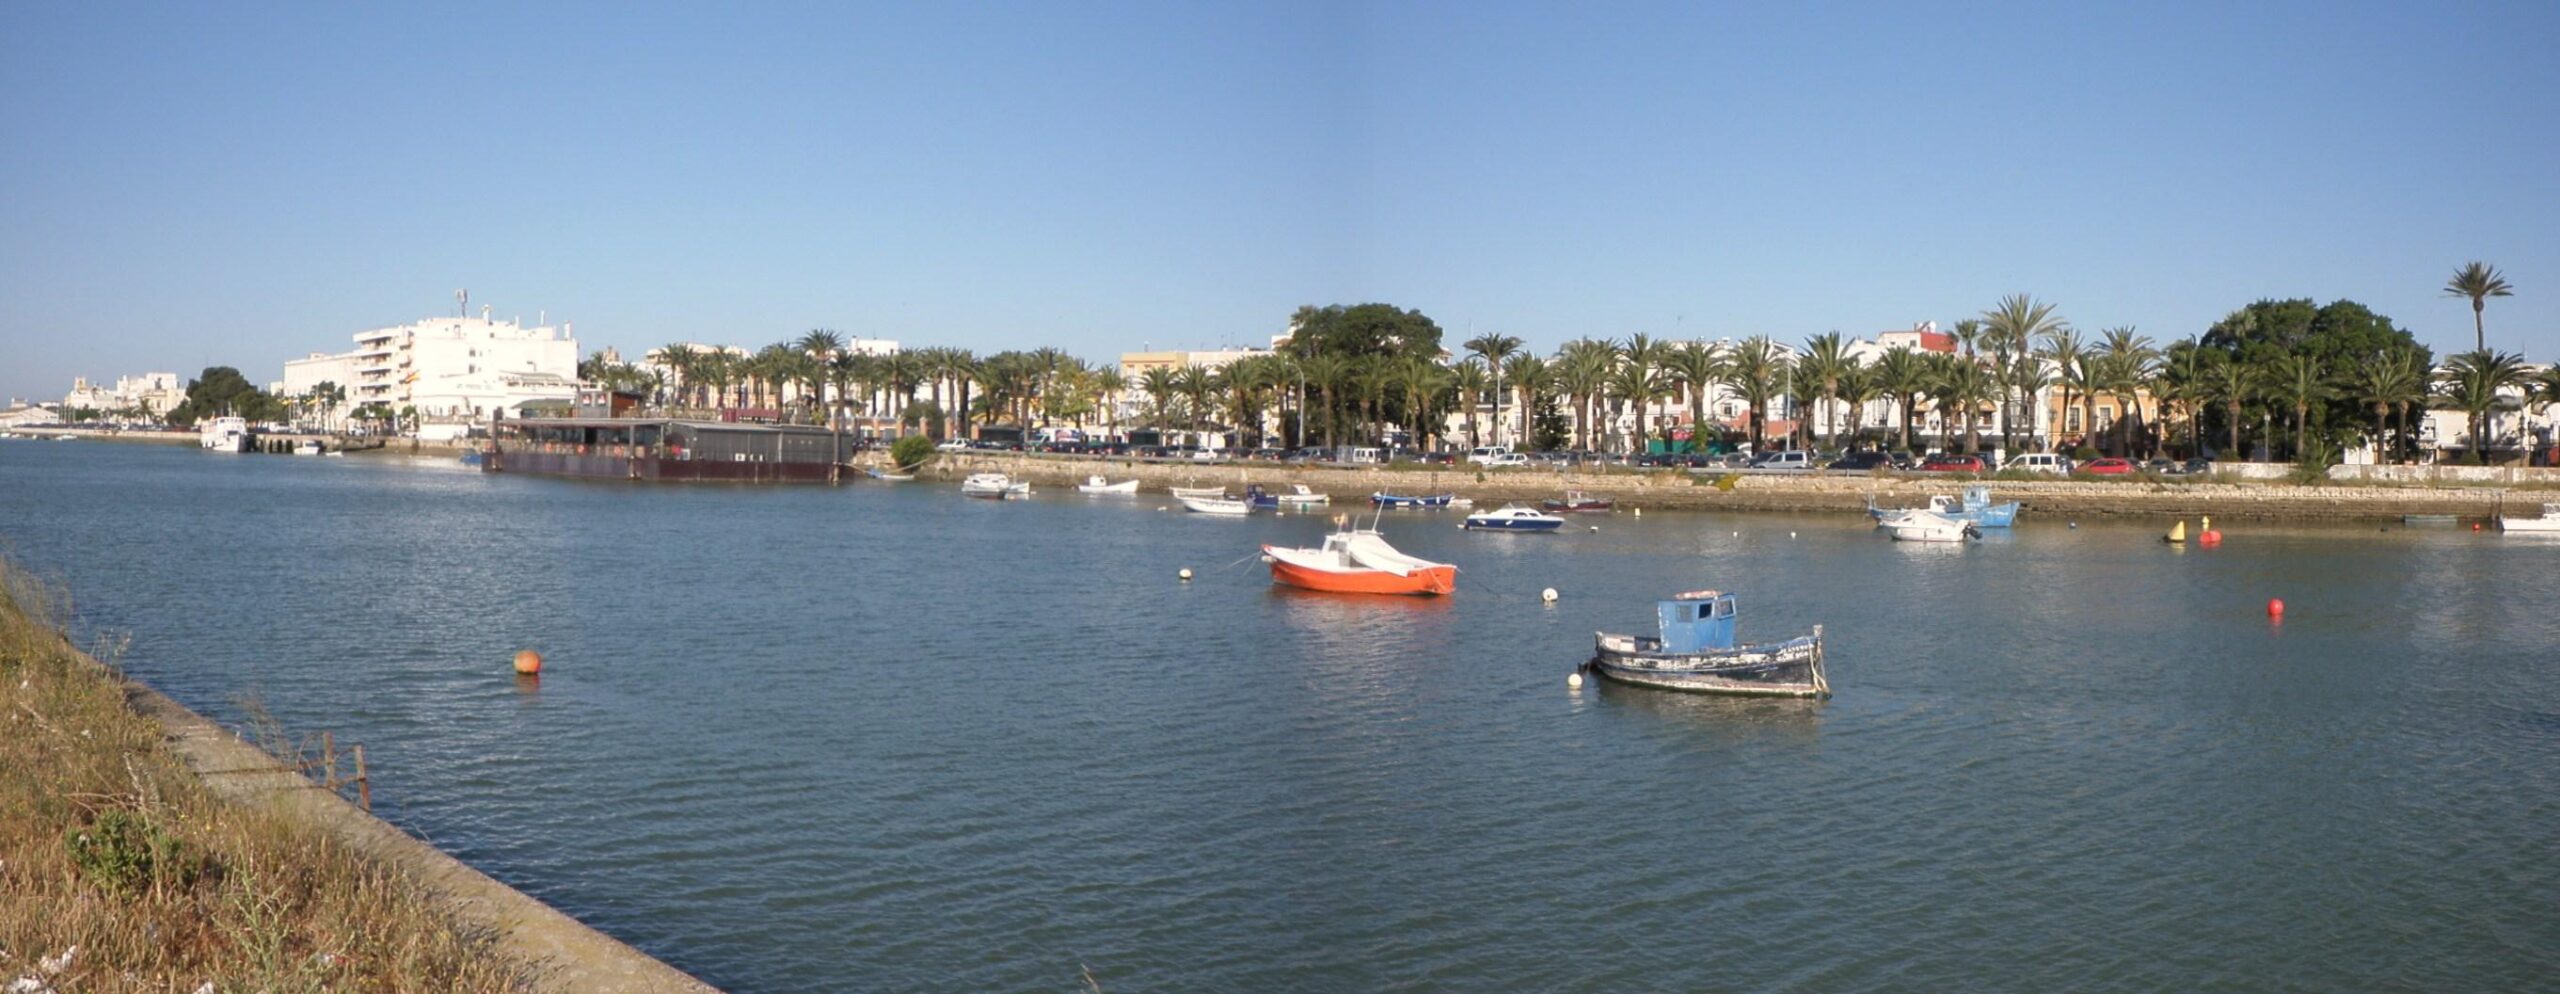 Parque Calderón, Puerto de Sta. María, Cádiz